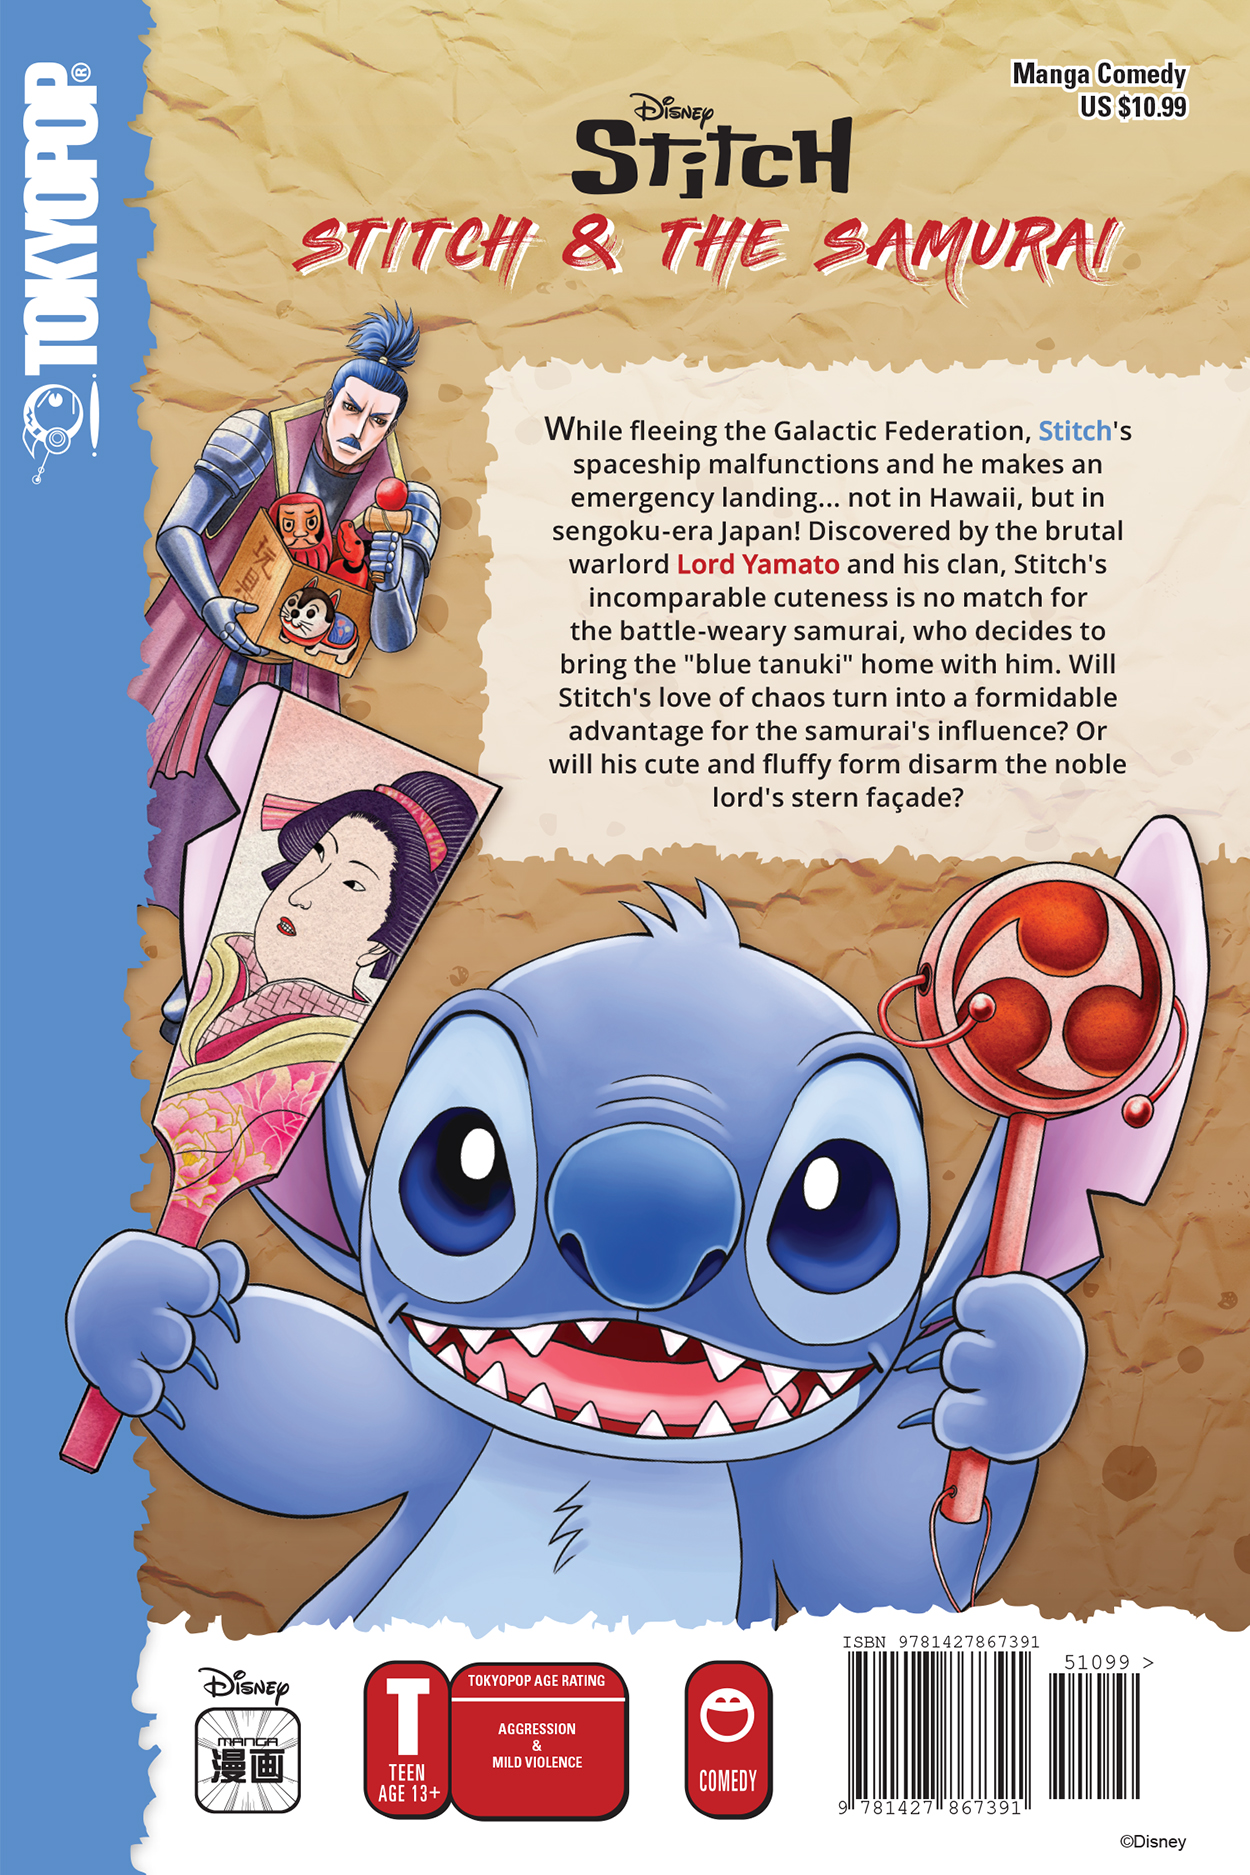 Disney Character Stitch Gets Manga Set in Feudal Japan - News